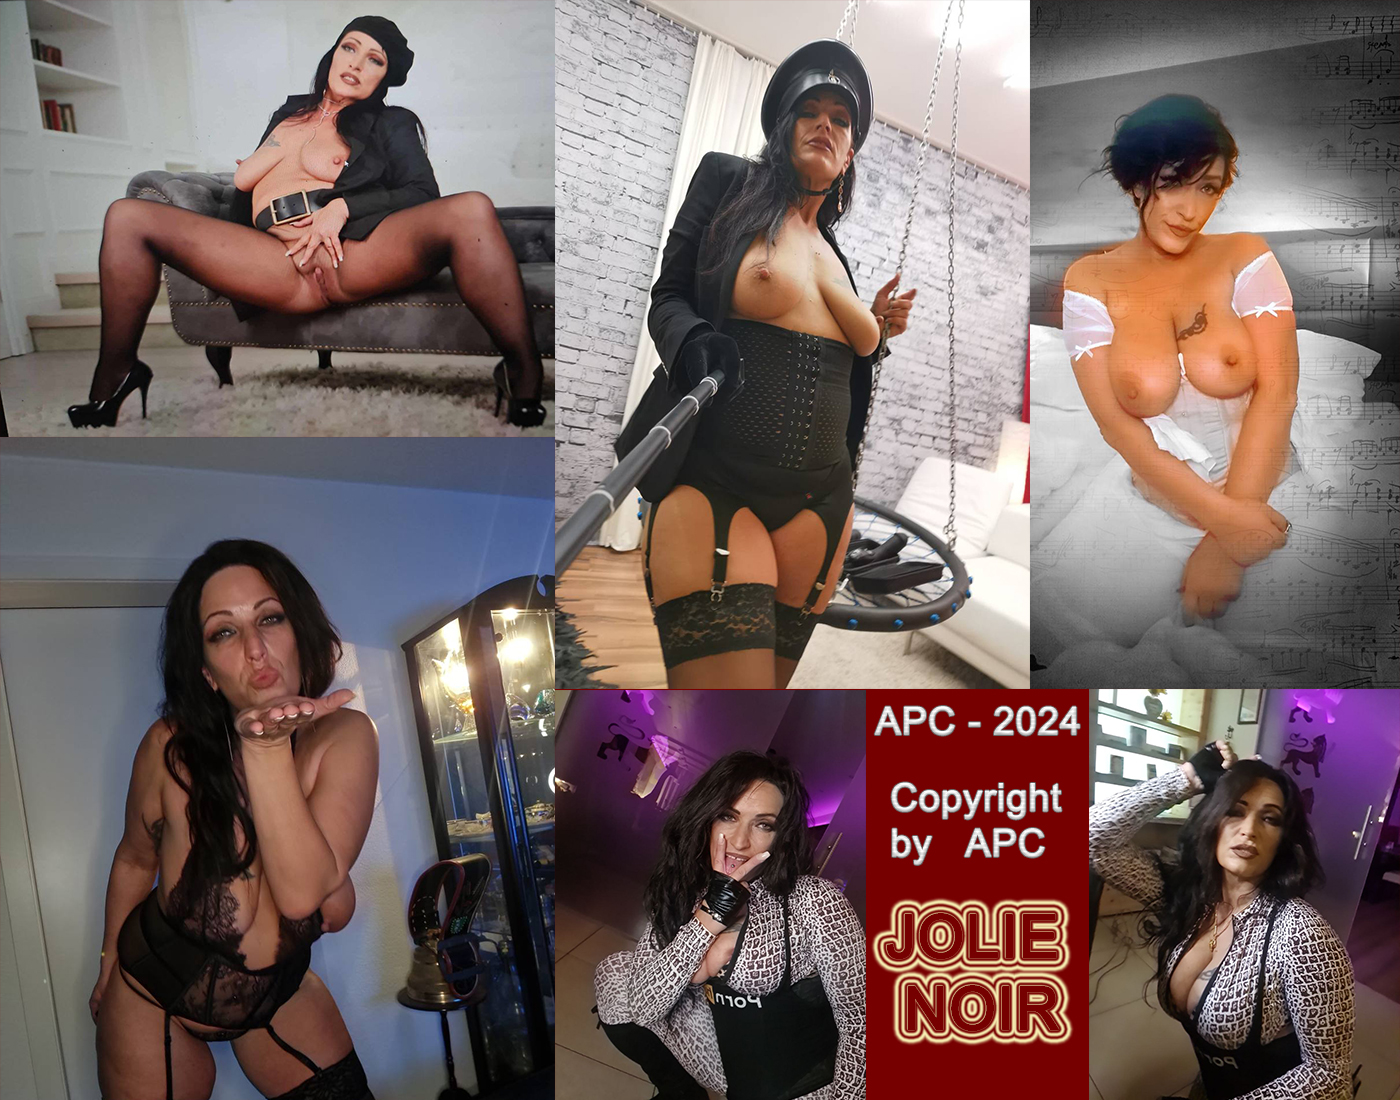 https://amateurporno-club.net/ac/bilder/Models/jolie%20noir/1400x1100.jpg